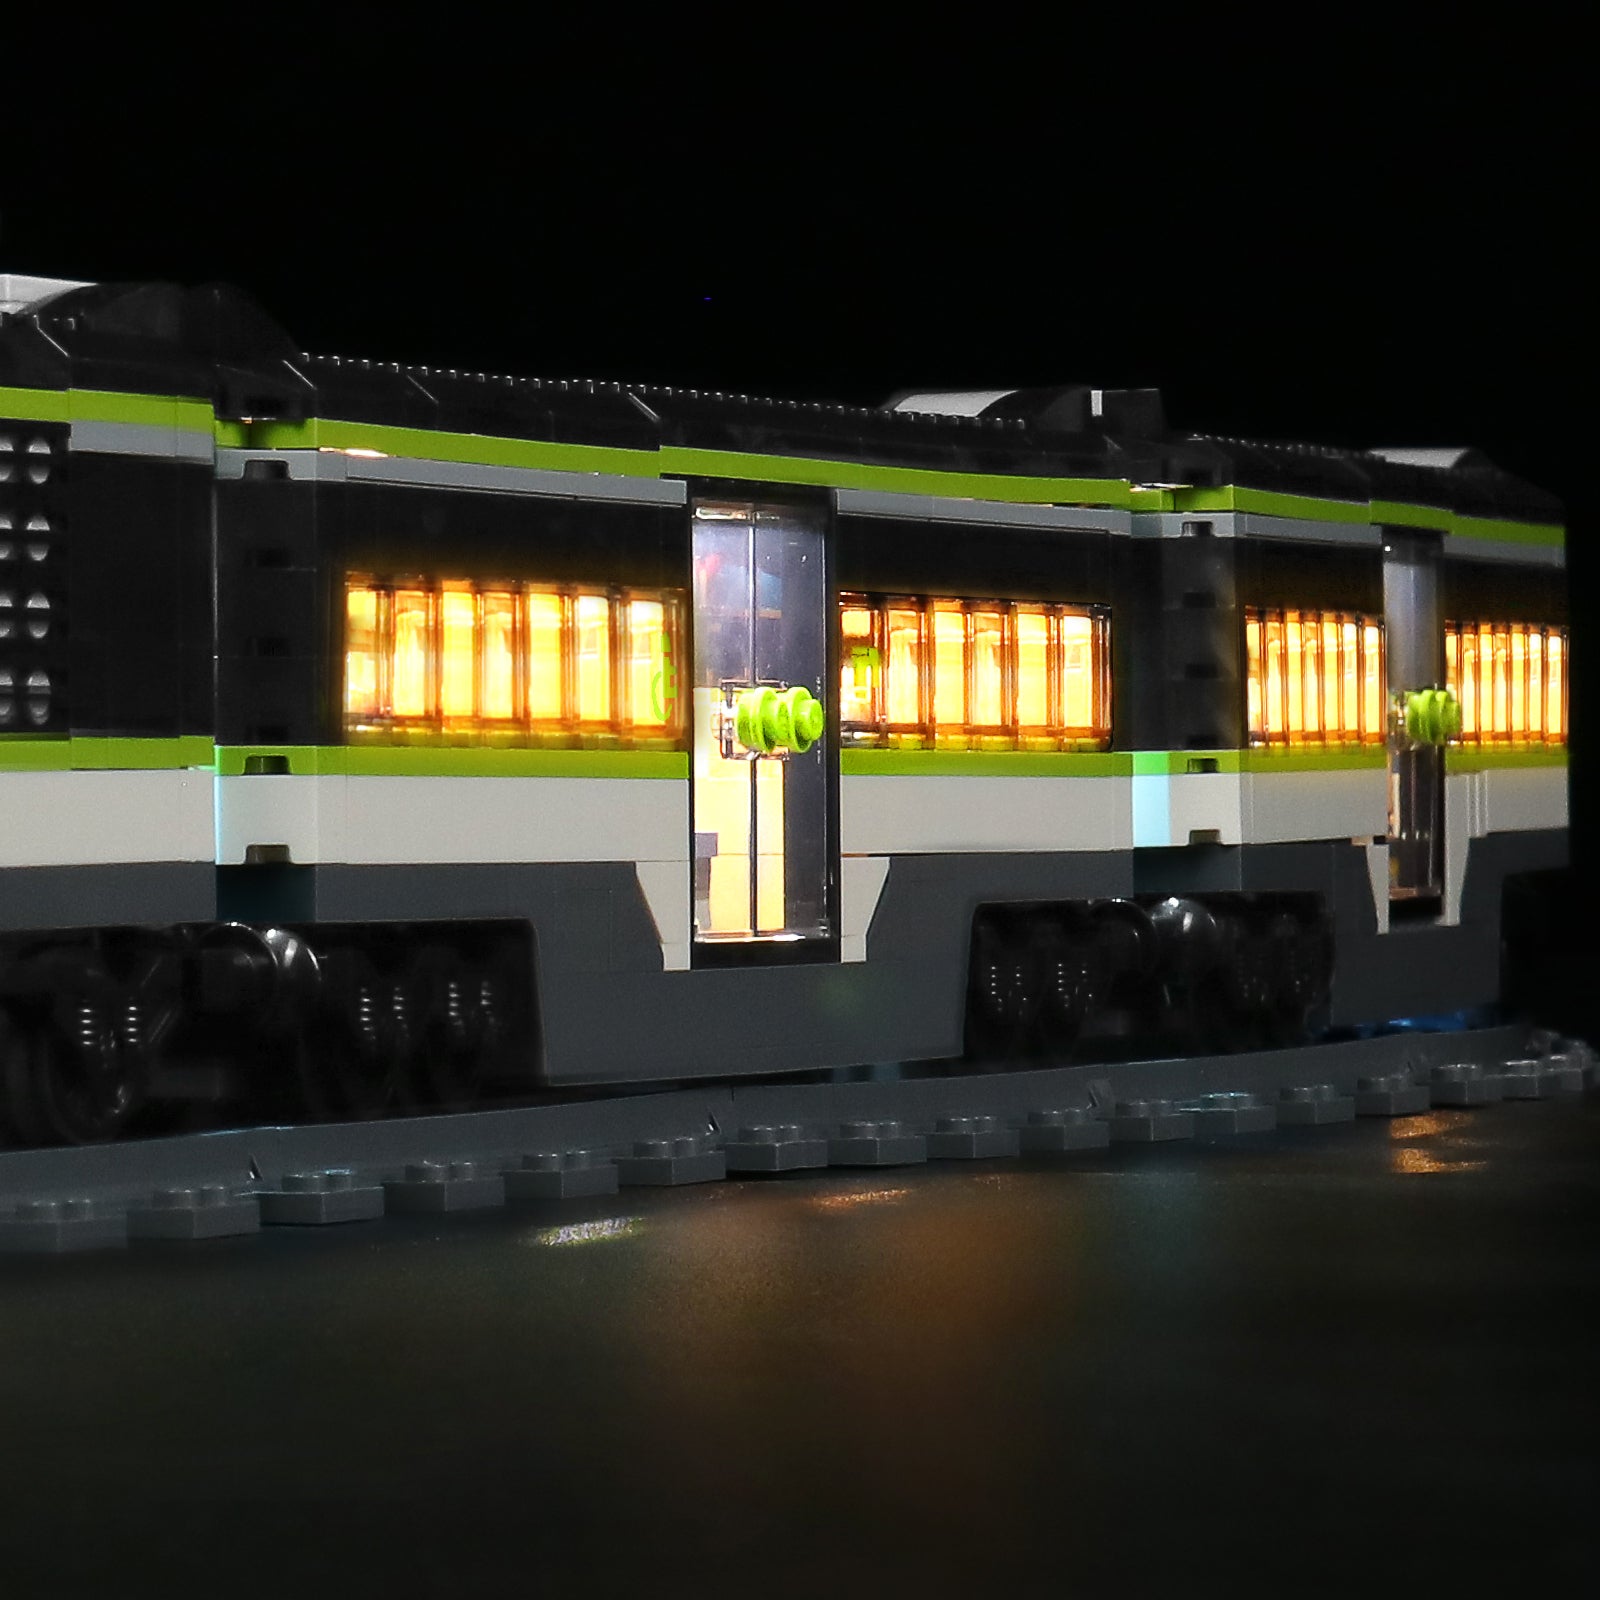  LIGHTAILING Light for Lego-60337 Express Passenger-Train - Led  Lighting Kit Compatible with Lego Building Blocks Model - NOT Included The  Model Set : Toys & Games